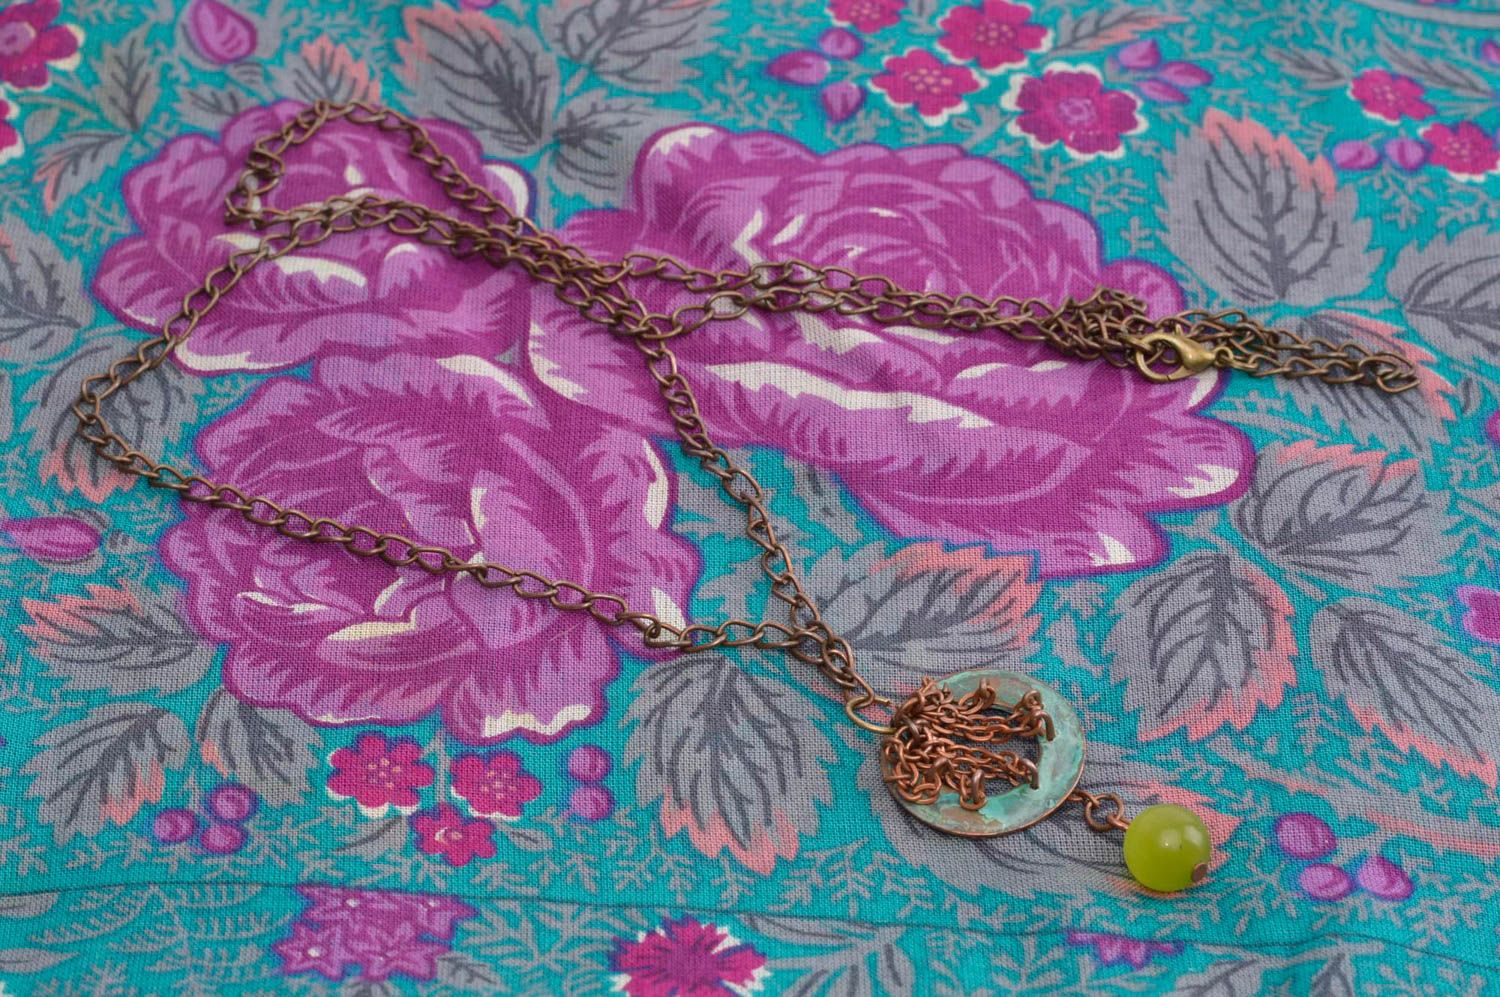 Copper pendant handmade copper pendant accessories for women homemade jewelry  photo 2